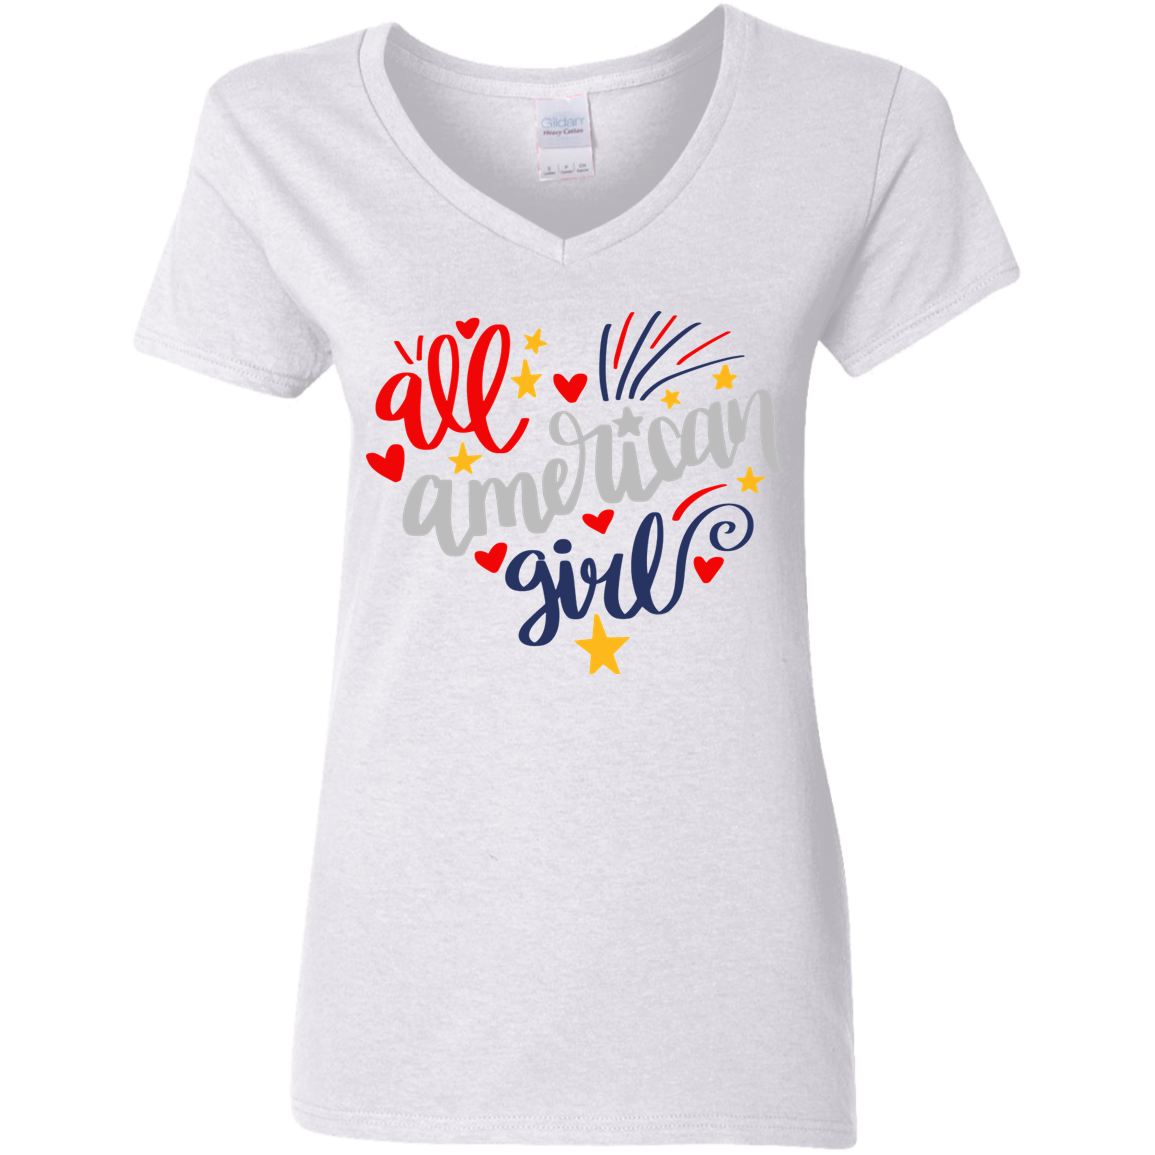 All American Girl | short sleeve premium Ladies' 5.3 oz. V-Neck T-Shirt